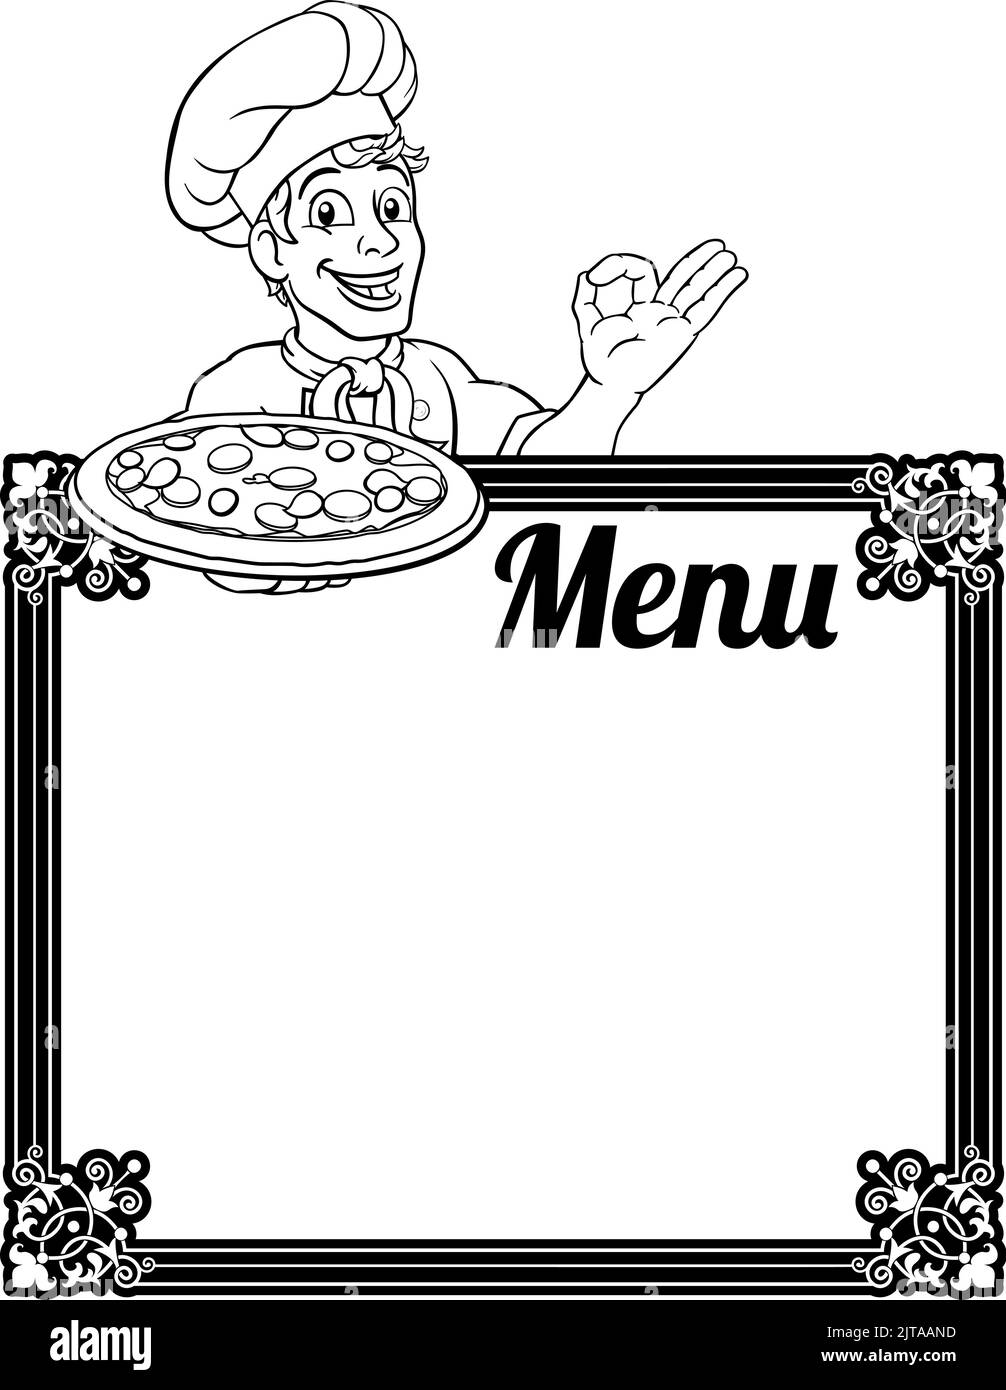 Pizza Chef Cook Cartoon Man Menu Sign Background Stock Vector